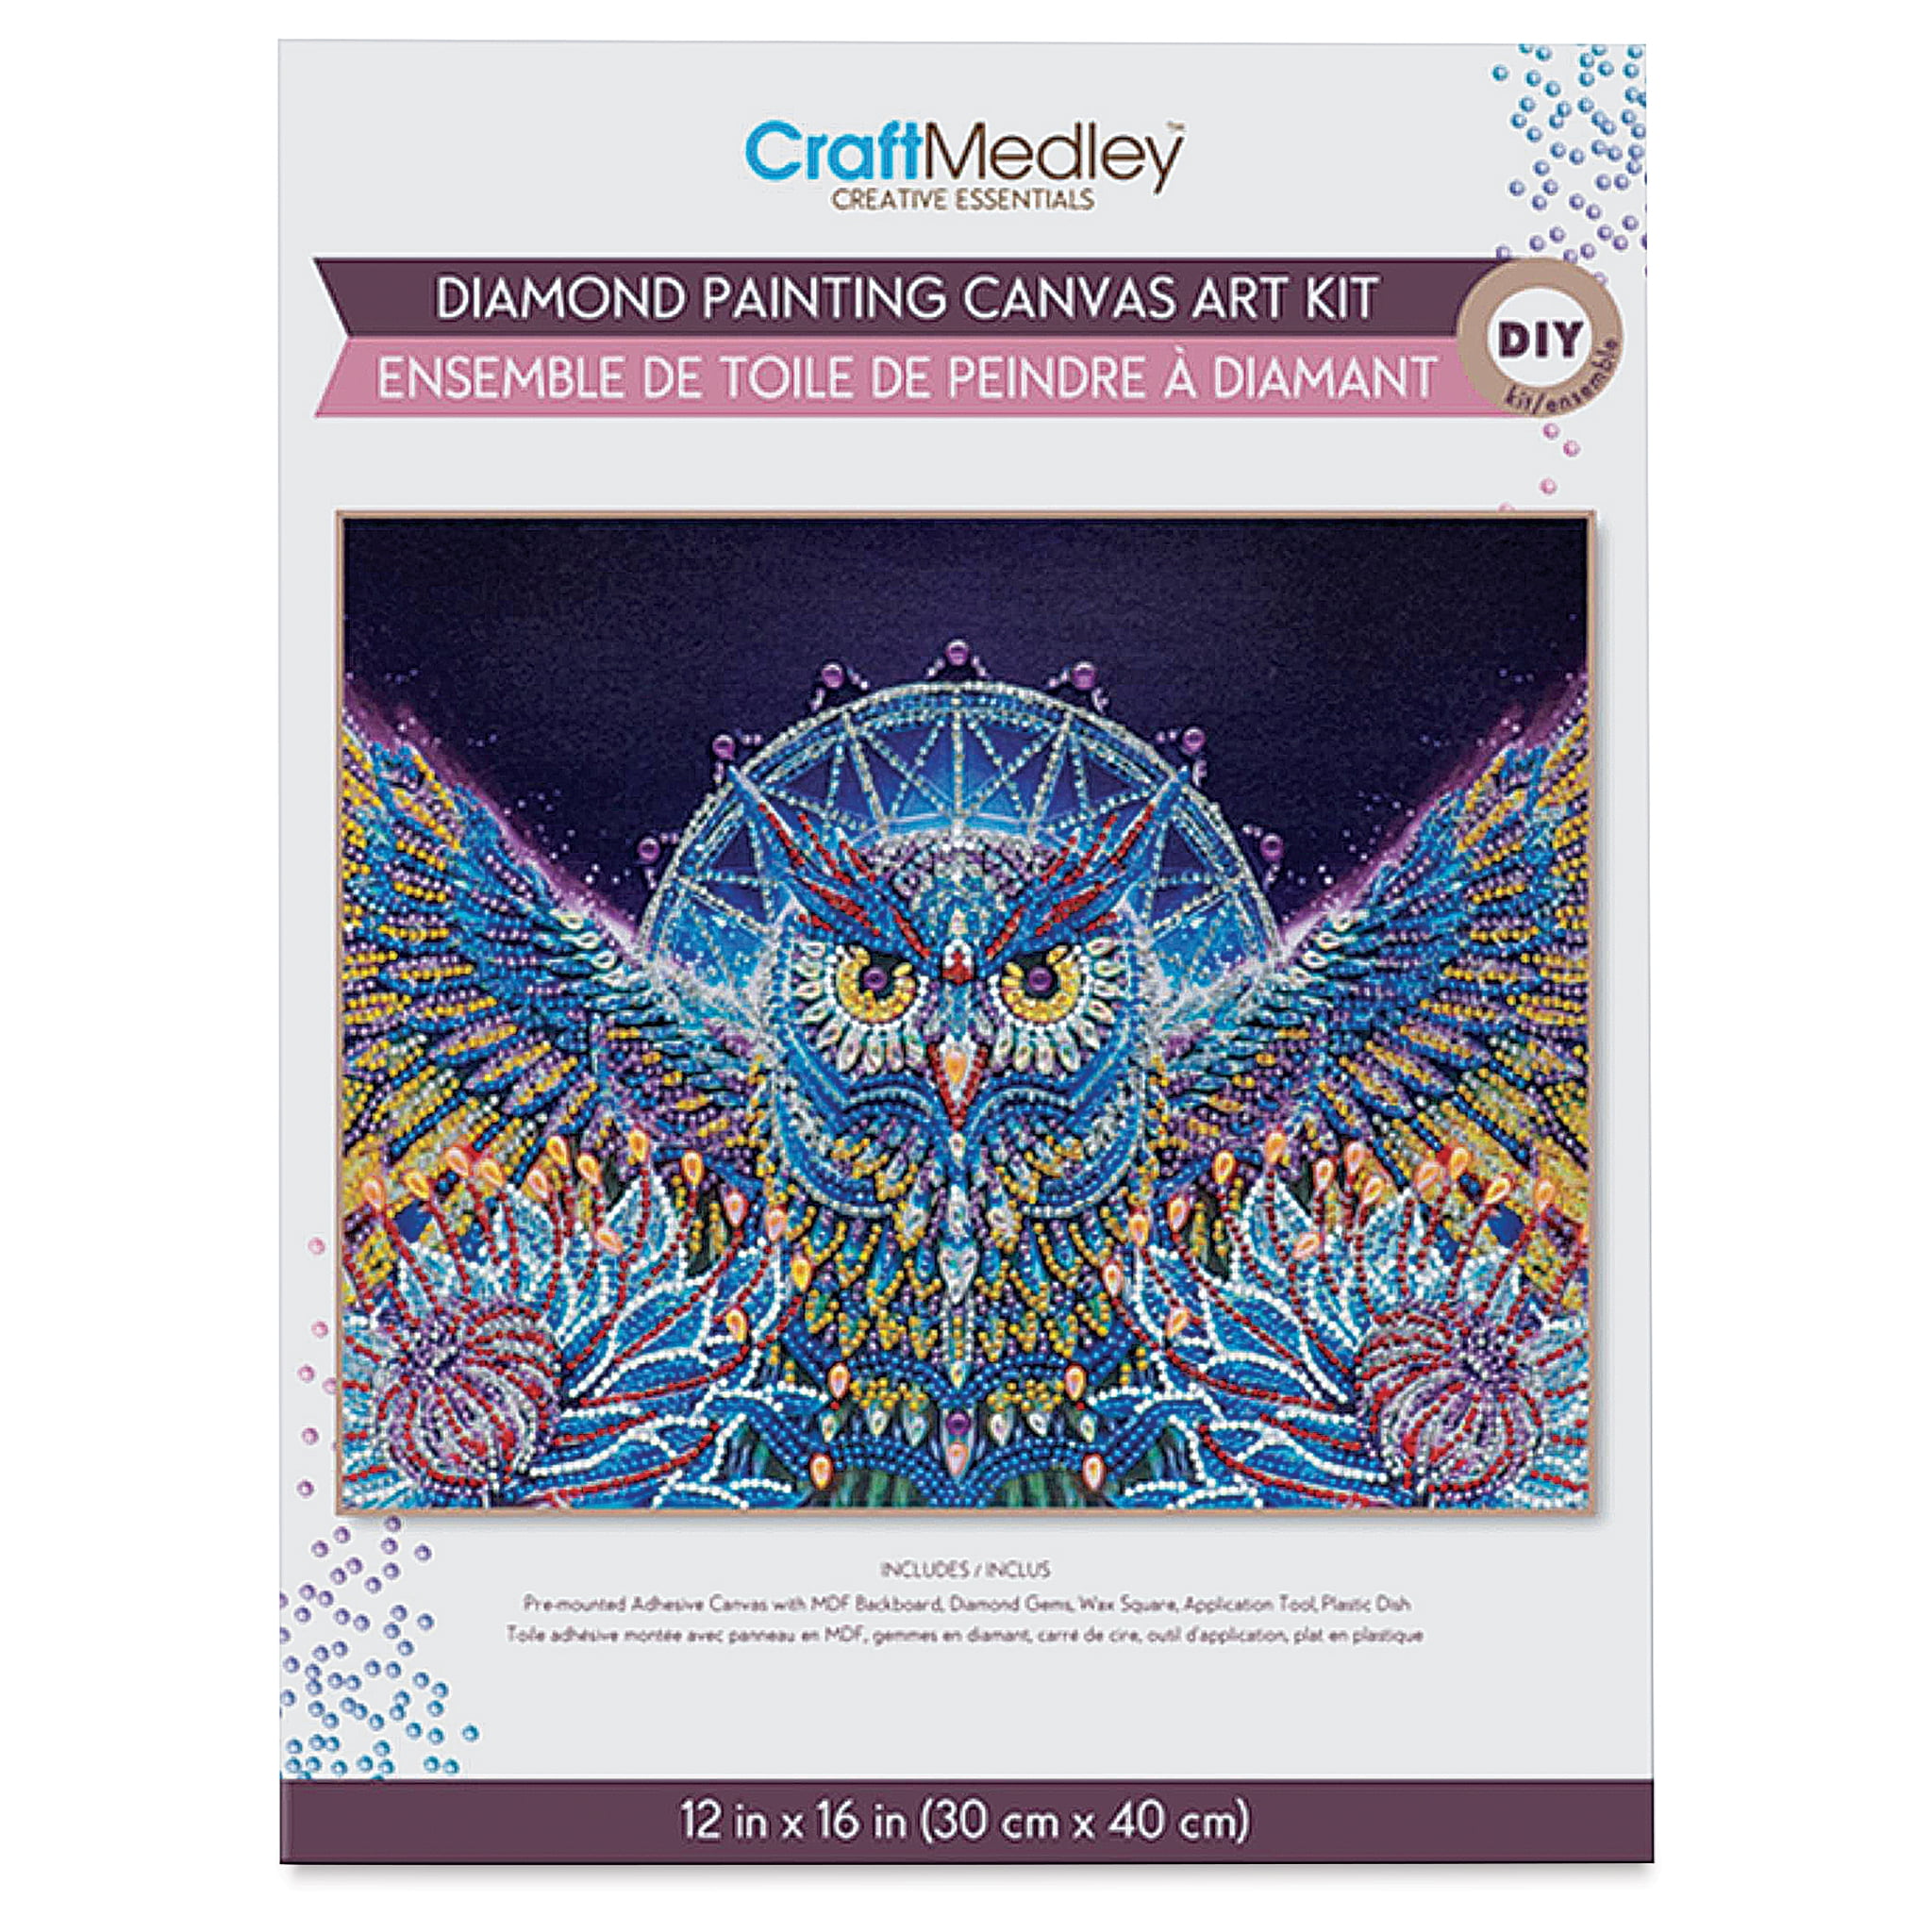 Craft Medley Diamond Painting Canvas Art Kit - Owl